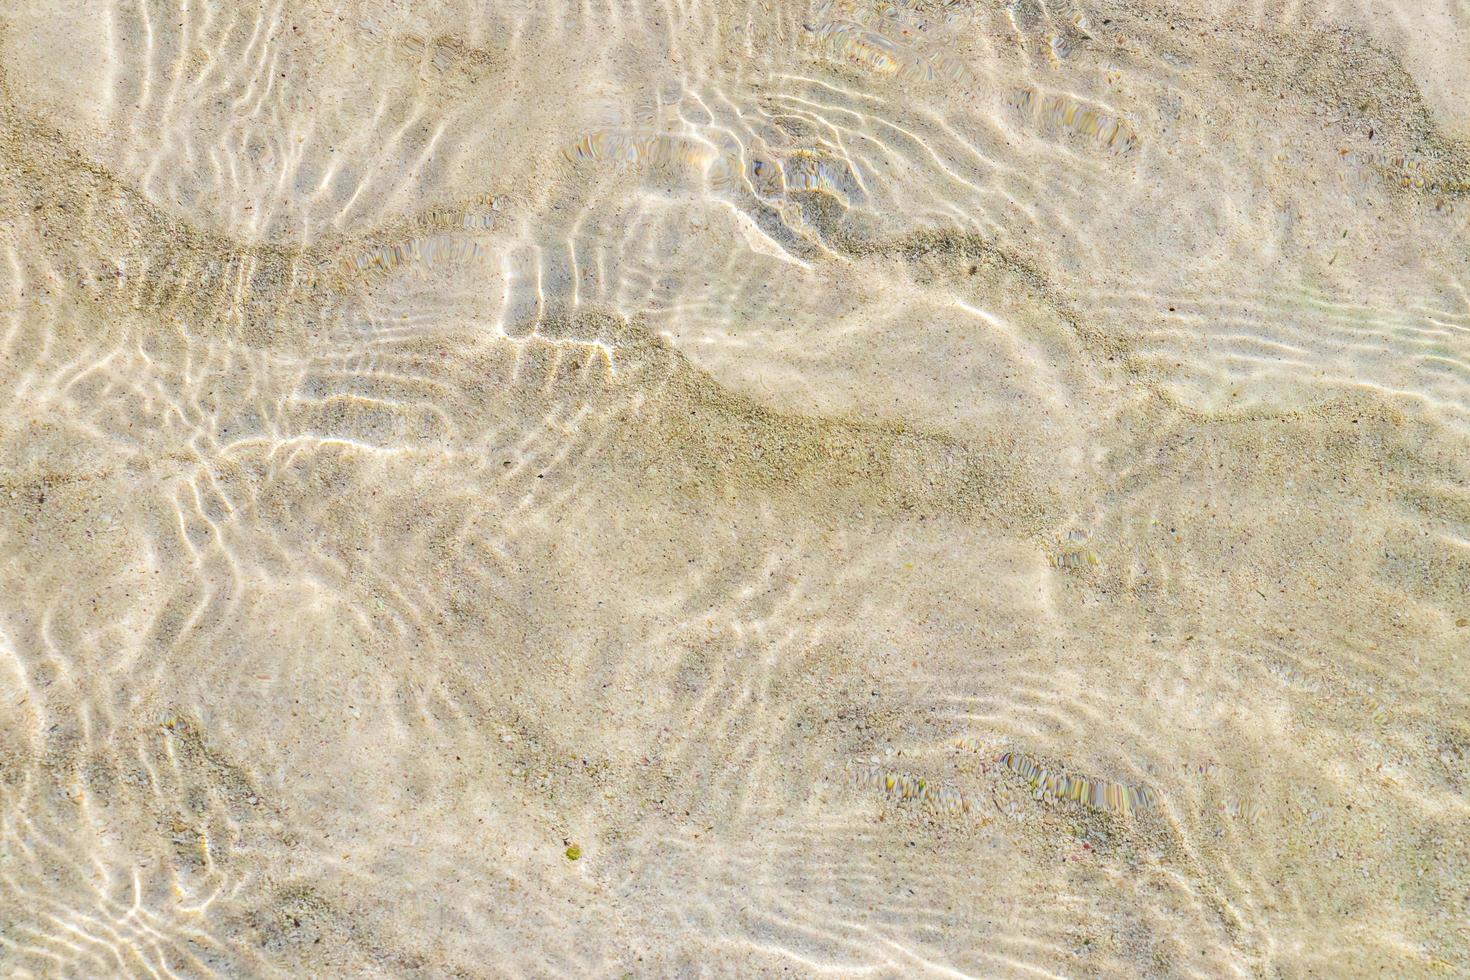 águas claras com areia punta esmeralda playa del carmen méxico. foto